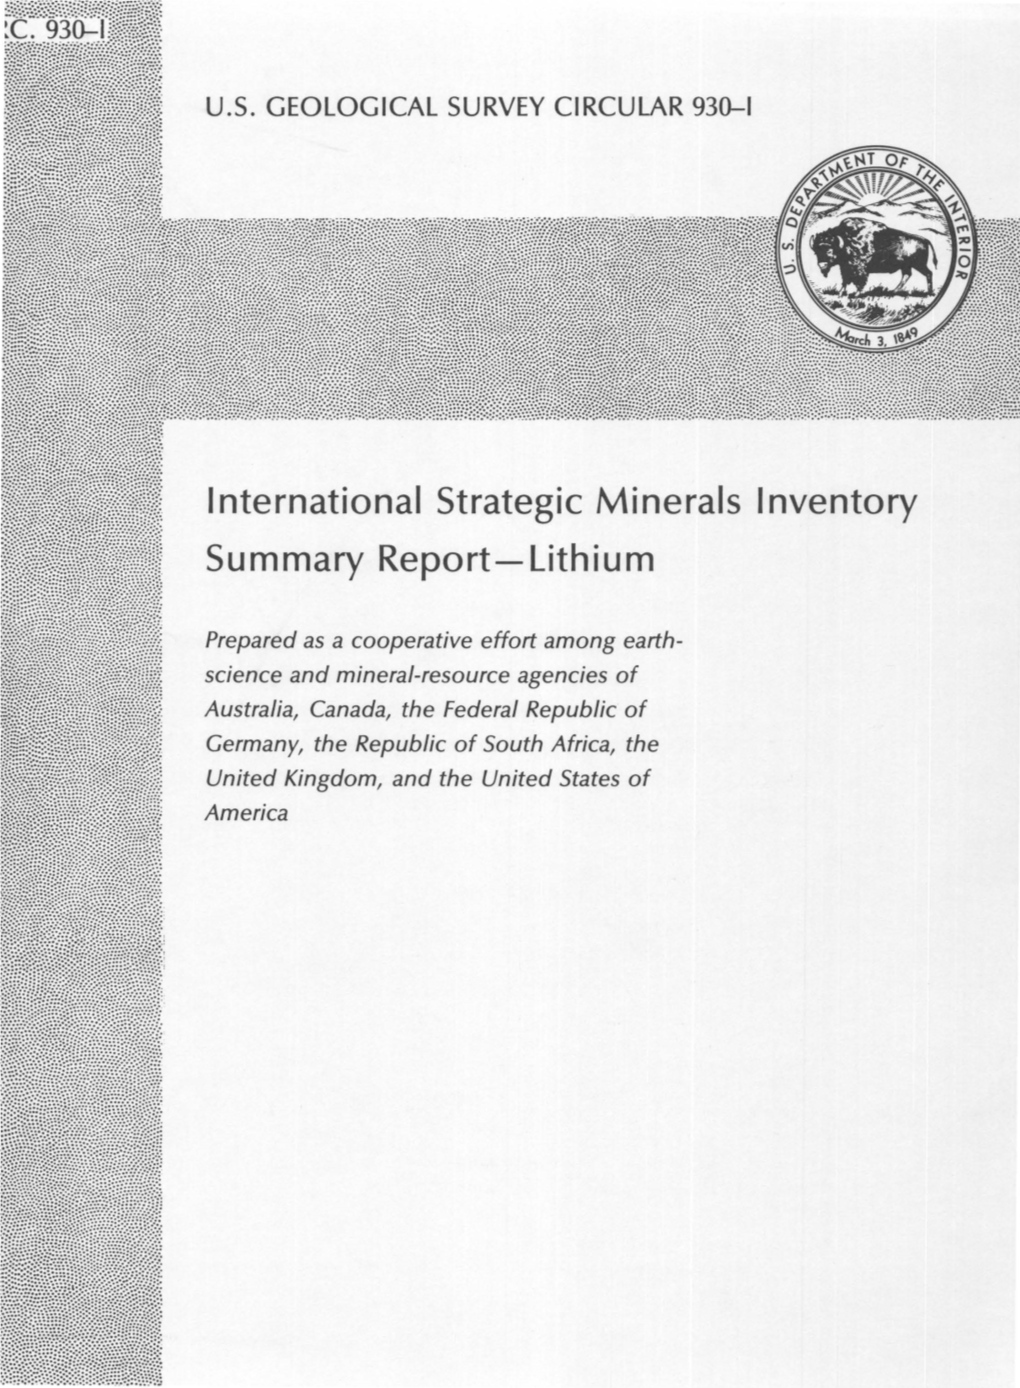 International Strategic Minerals Inventory Summary Report-Lithium